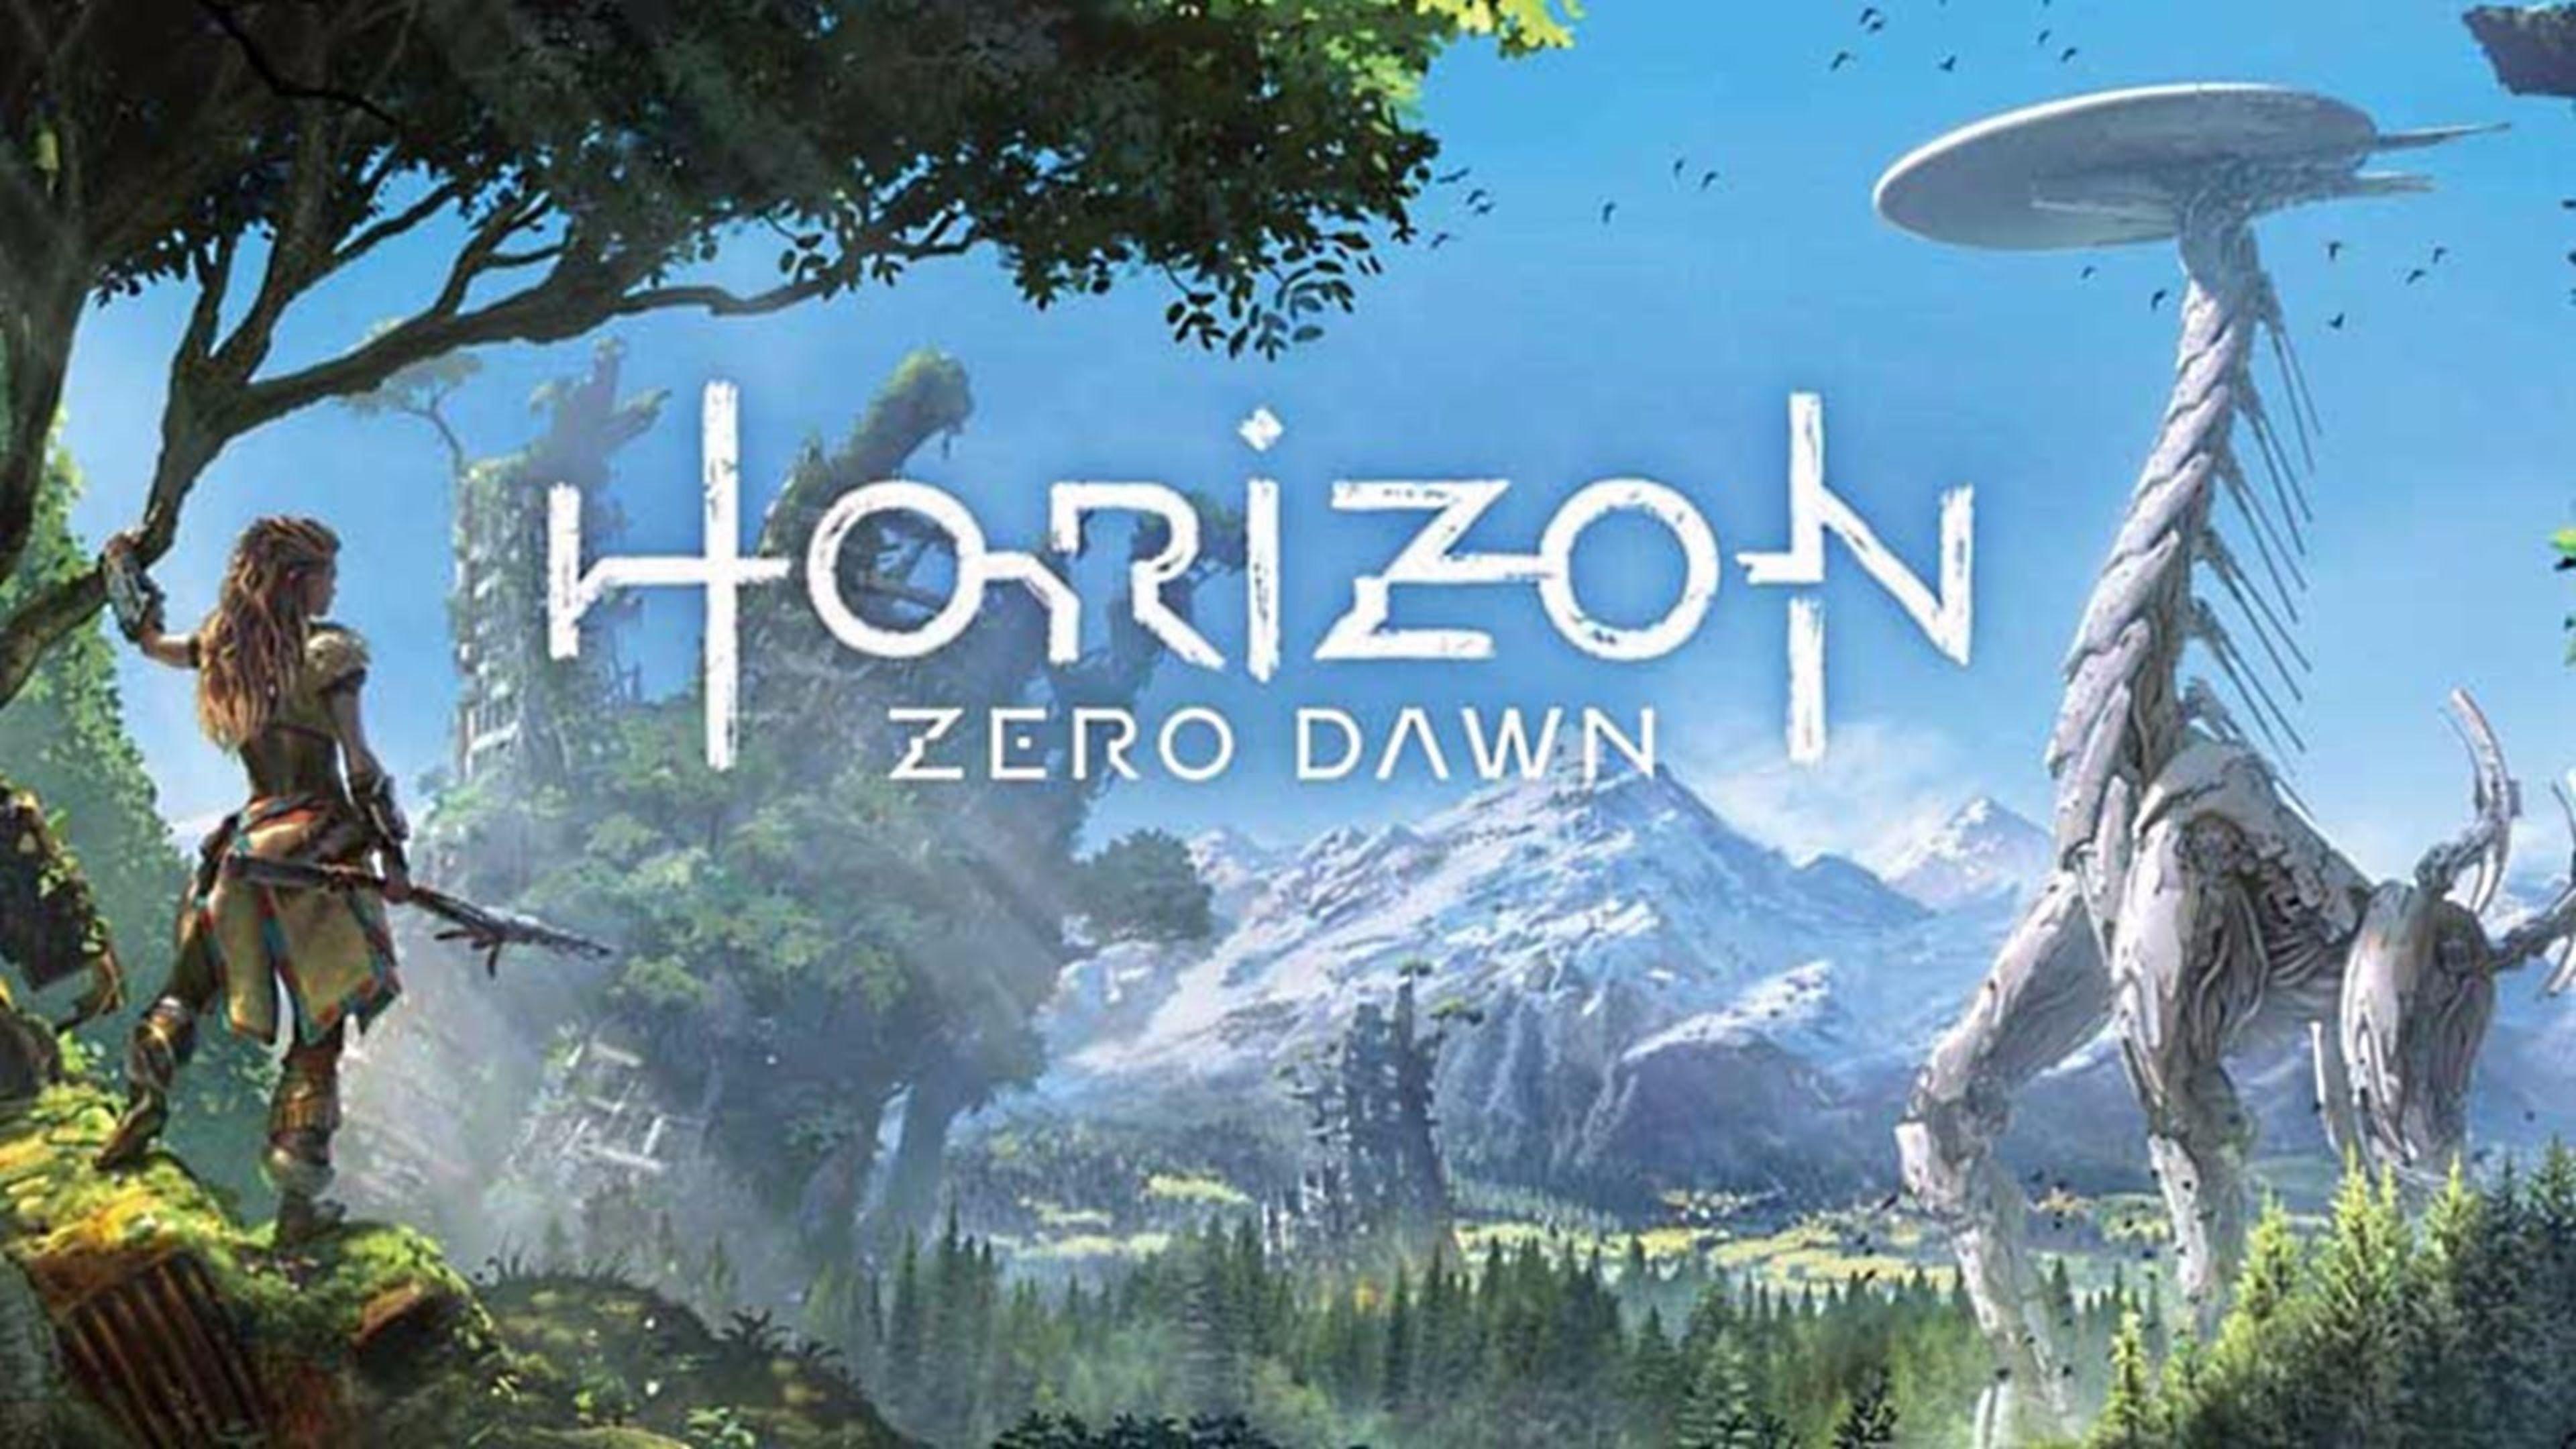 Playstation 4 Exclusive 2016 Horizon Zero Dawn 4K Wallpaper